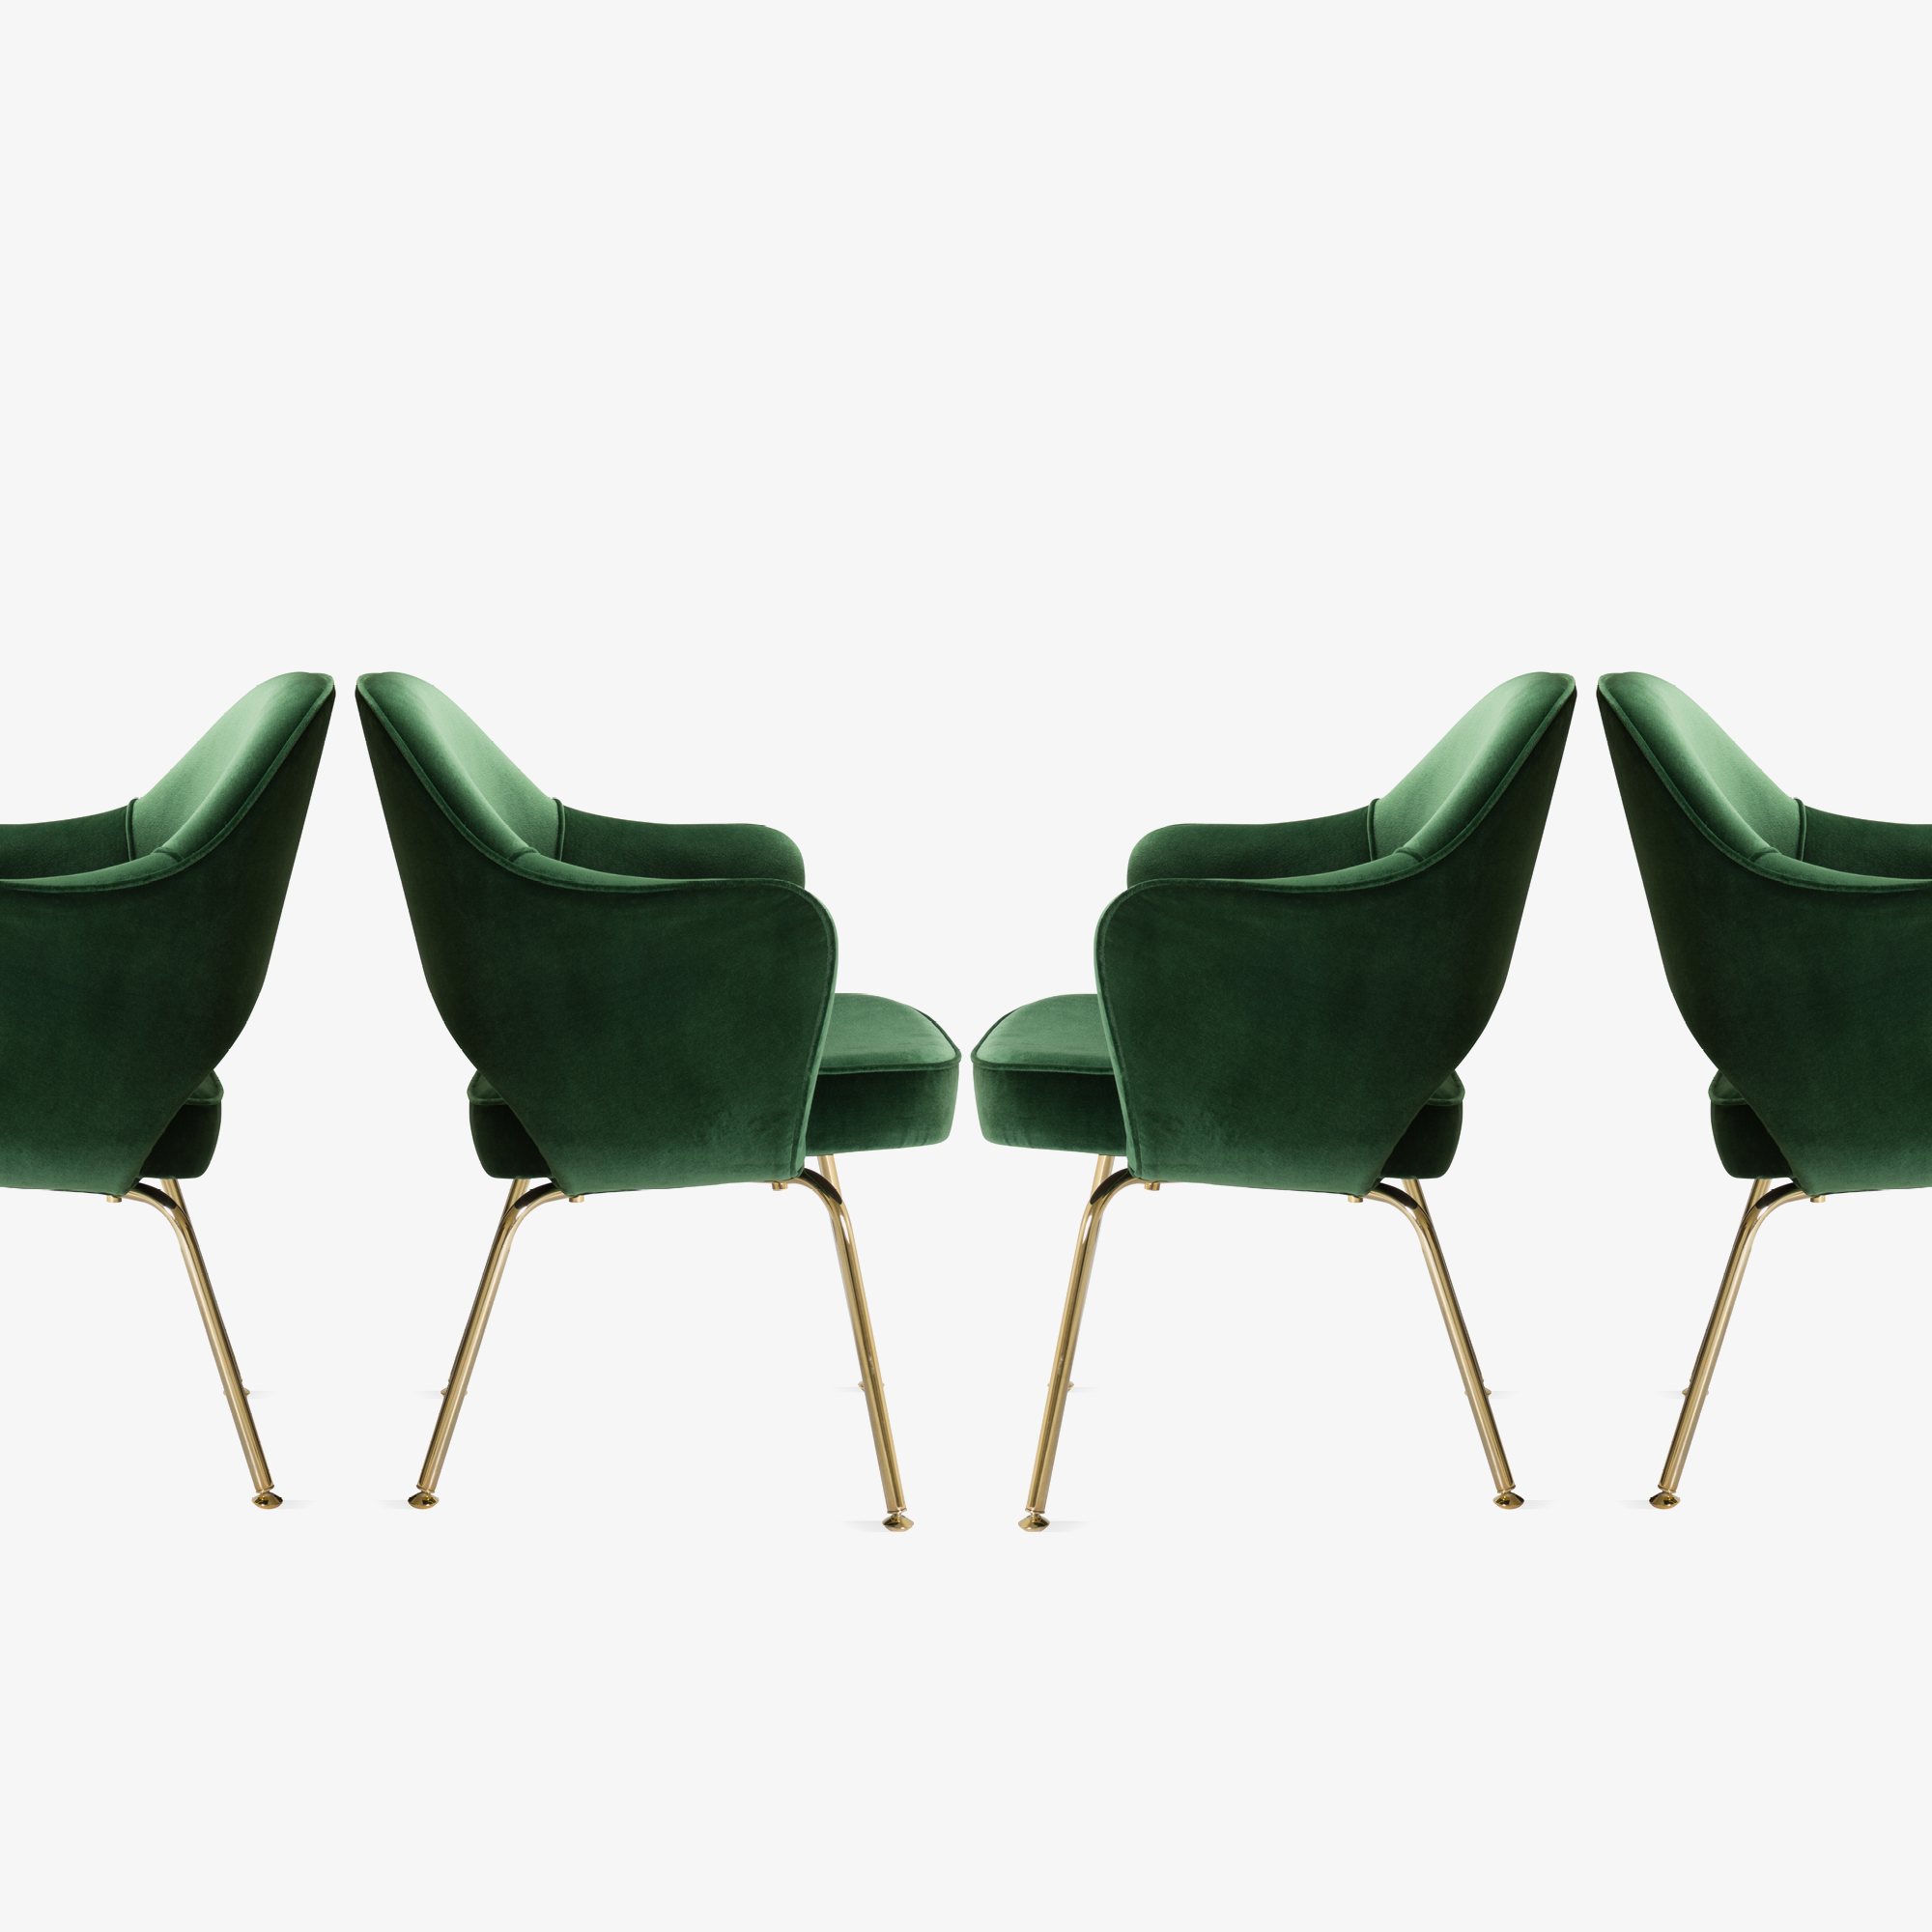 Saarinen Executive Arm Chair in Emerald Velvet, 24k Gold Edition4.png